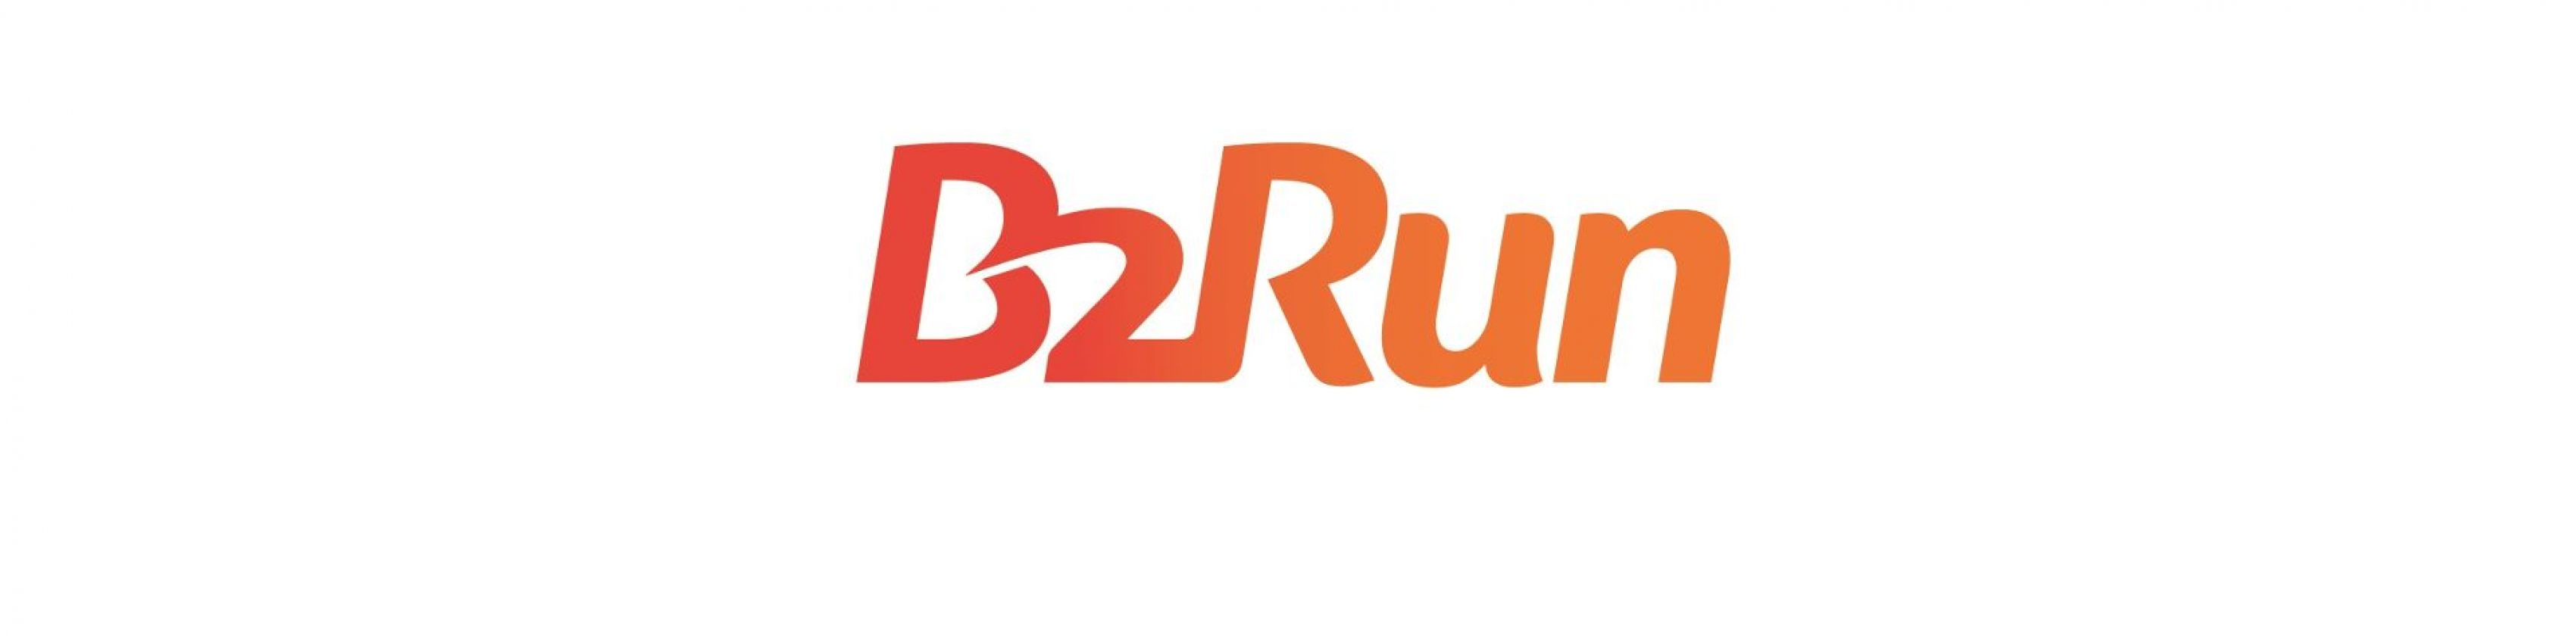 b2run